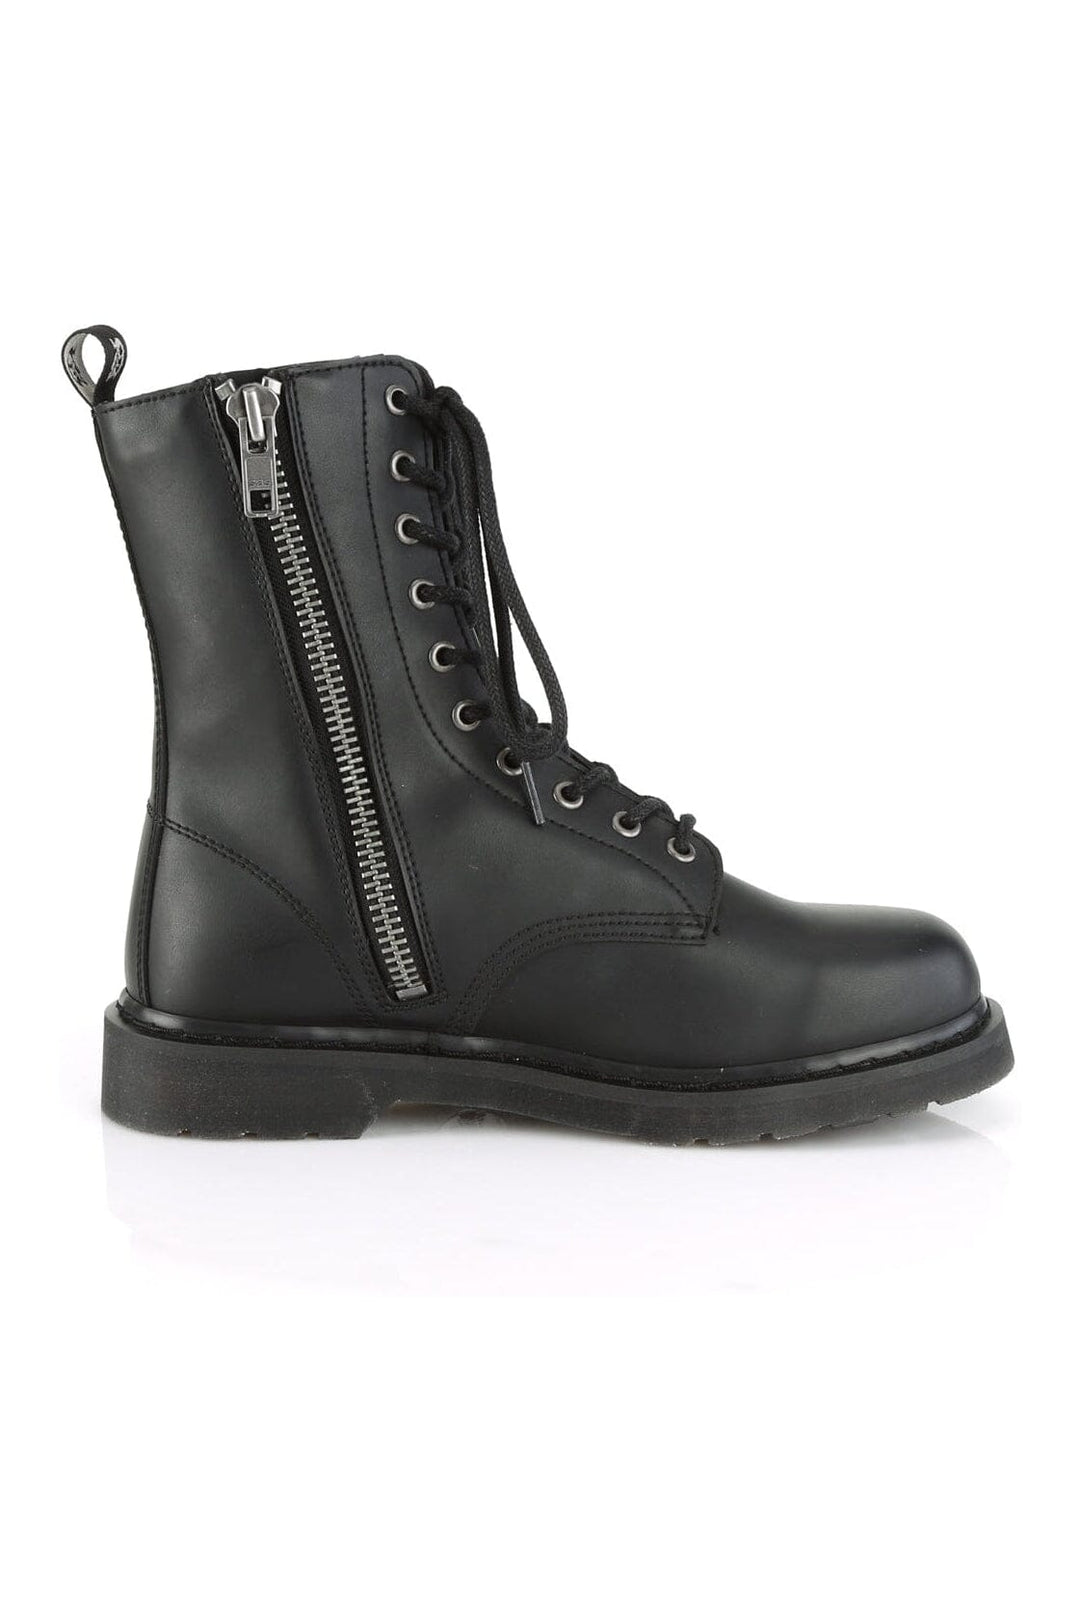 BOLT-200 Black Vegan Leather Knee Boot-Knee Boots-Demonia-SEXYSHOES.COM